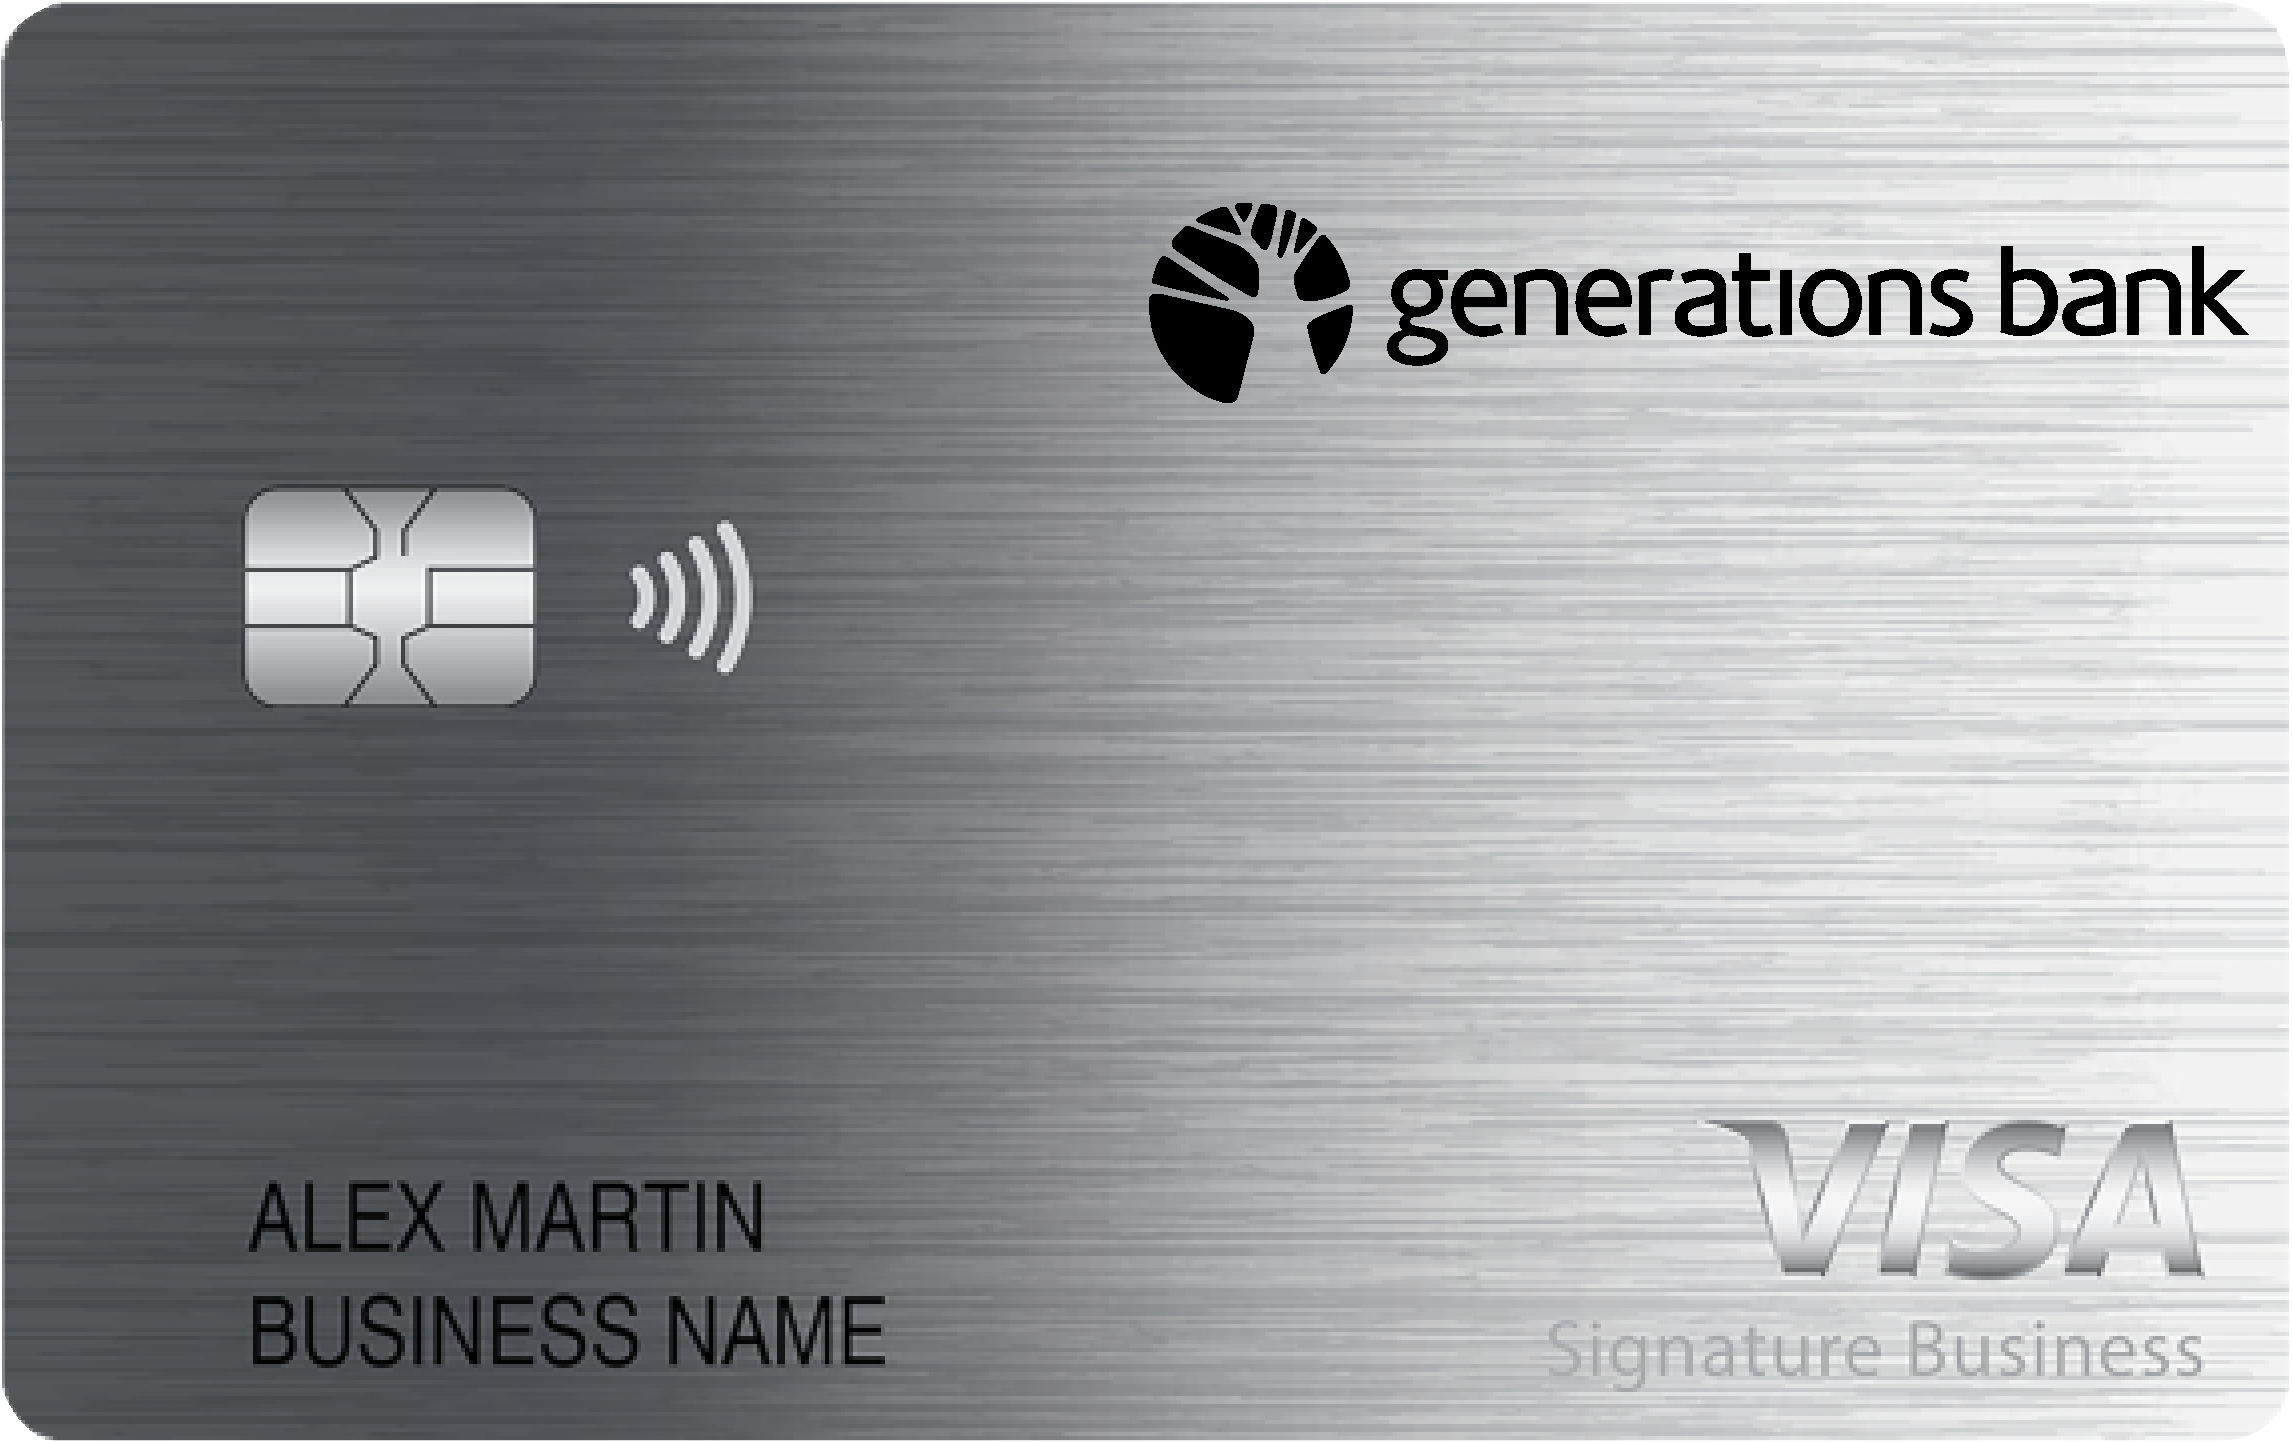 Generations Bank Smart Business Rewards Card